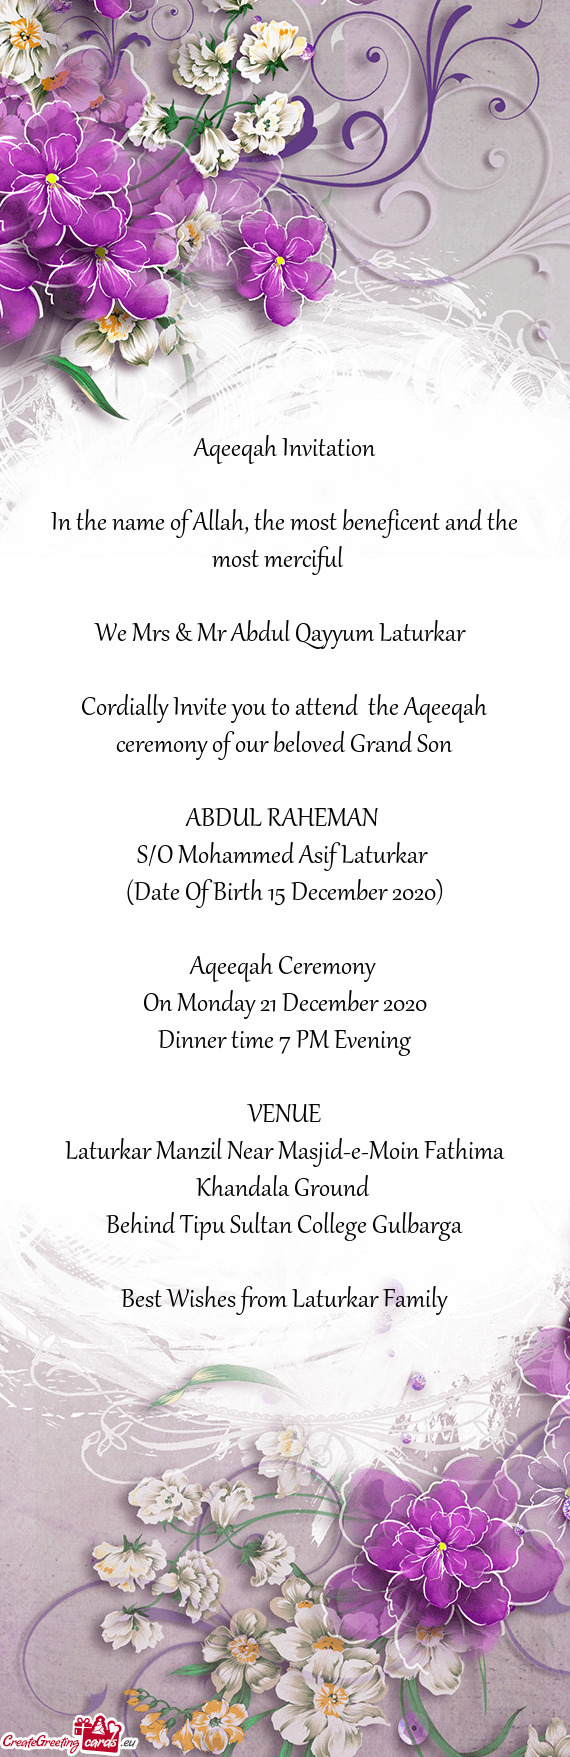 We Mrs & Mr Abdul Qayyum Laturkar